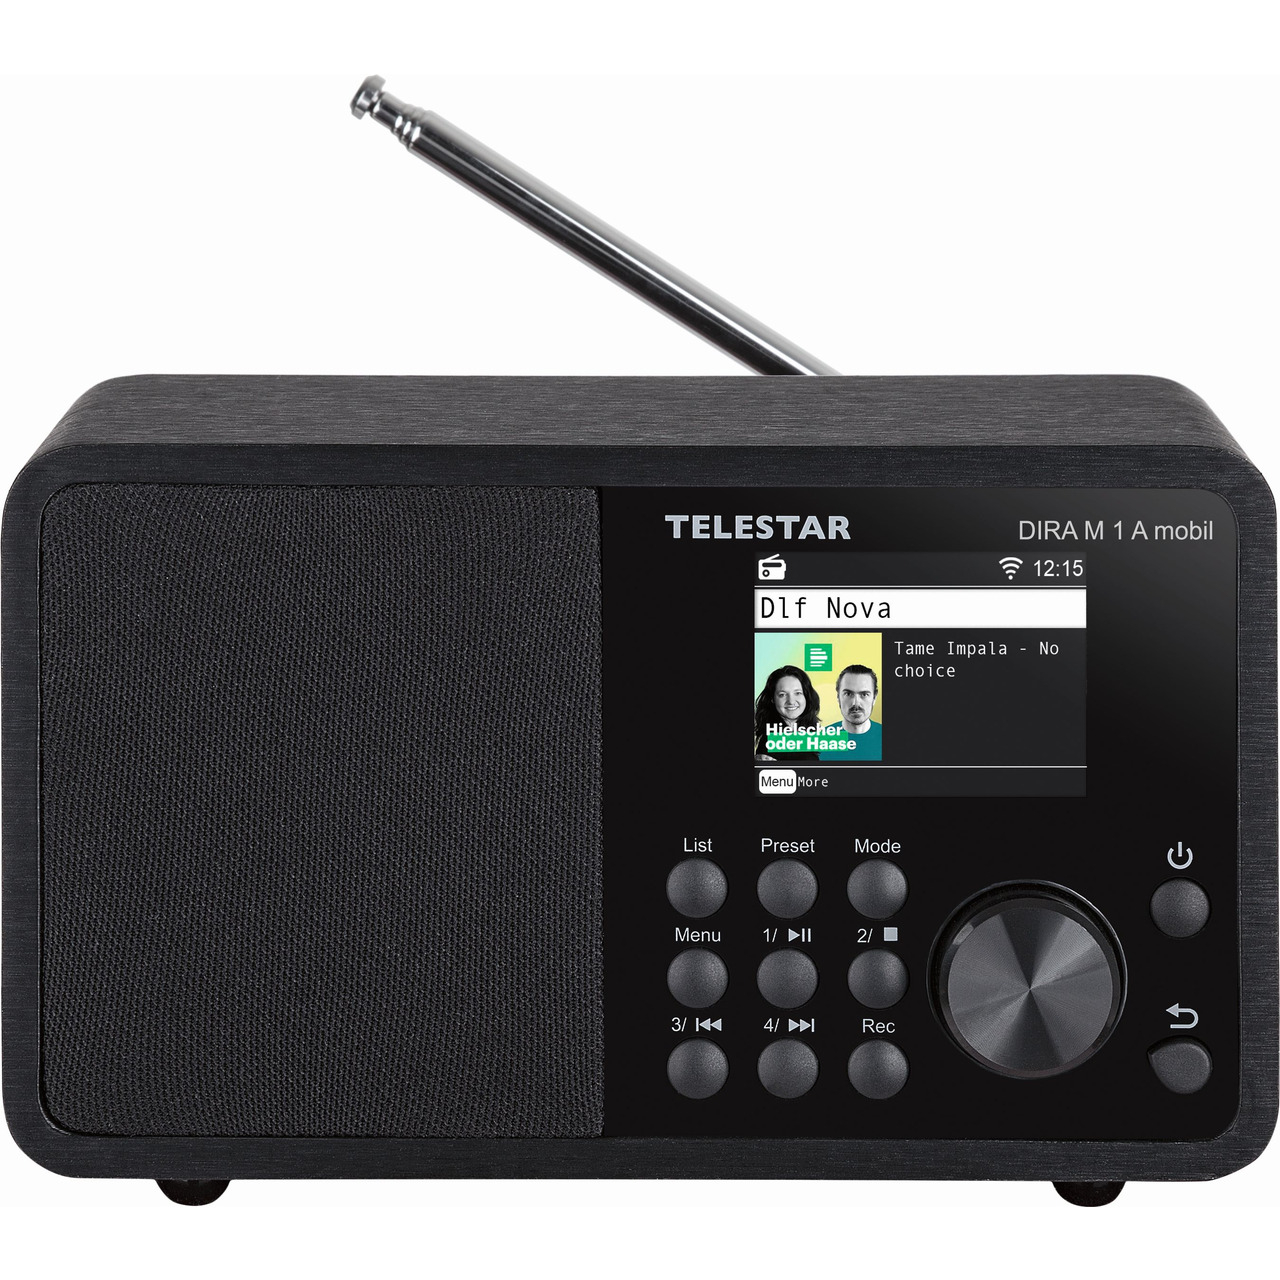 Telestar Hybrid-Digitalradio DIRA M1A mobil mit Notfall-Warnsystem EWF- DAB+-UKW-Internetradio- Akku unter Multimedia